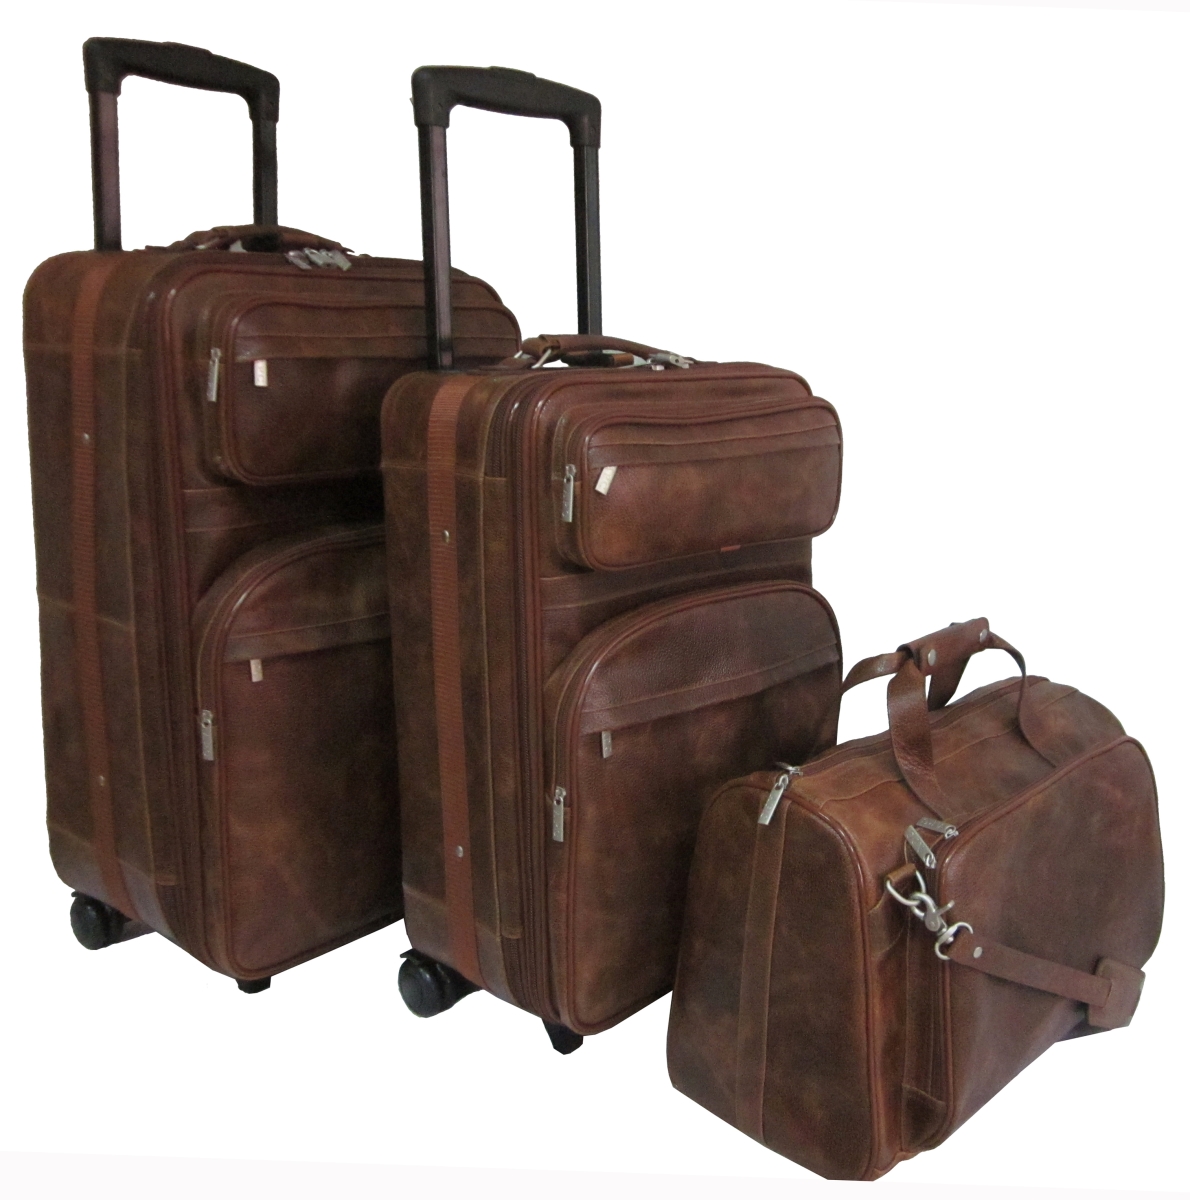 8003-4 Leather Traveler Set, Waxy Brown - 3 Piece